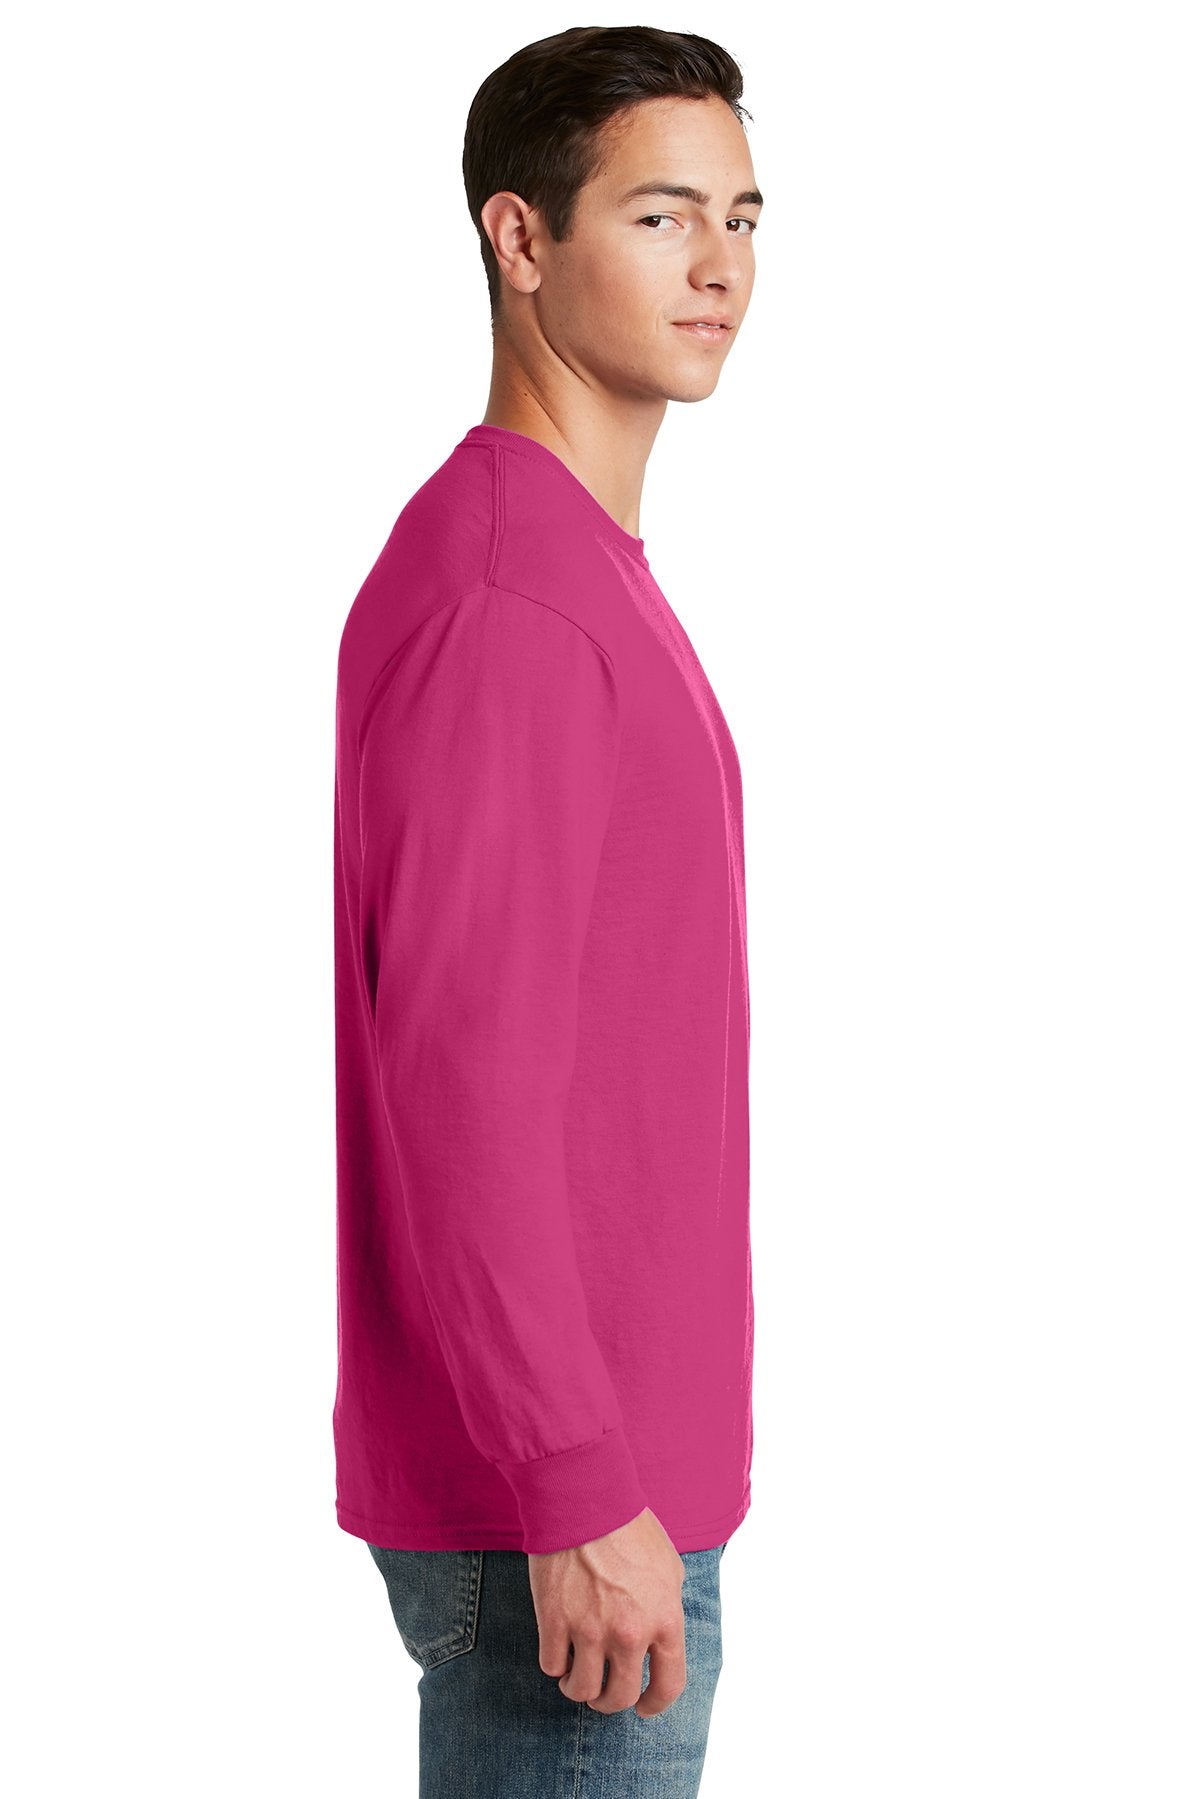 Jerzees Dri-Power 50/50 Cotton/Poly Long Sleeve T-Shirt 29LS Cyber Pink